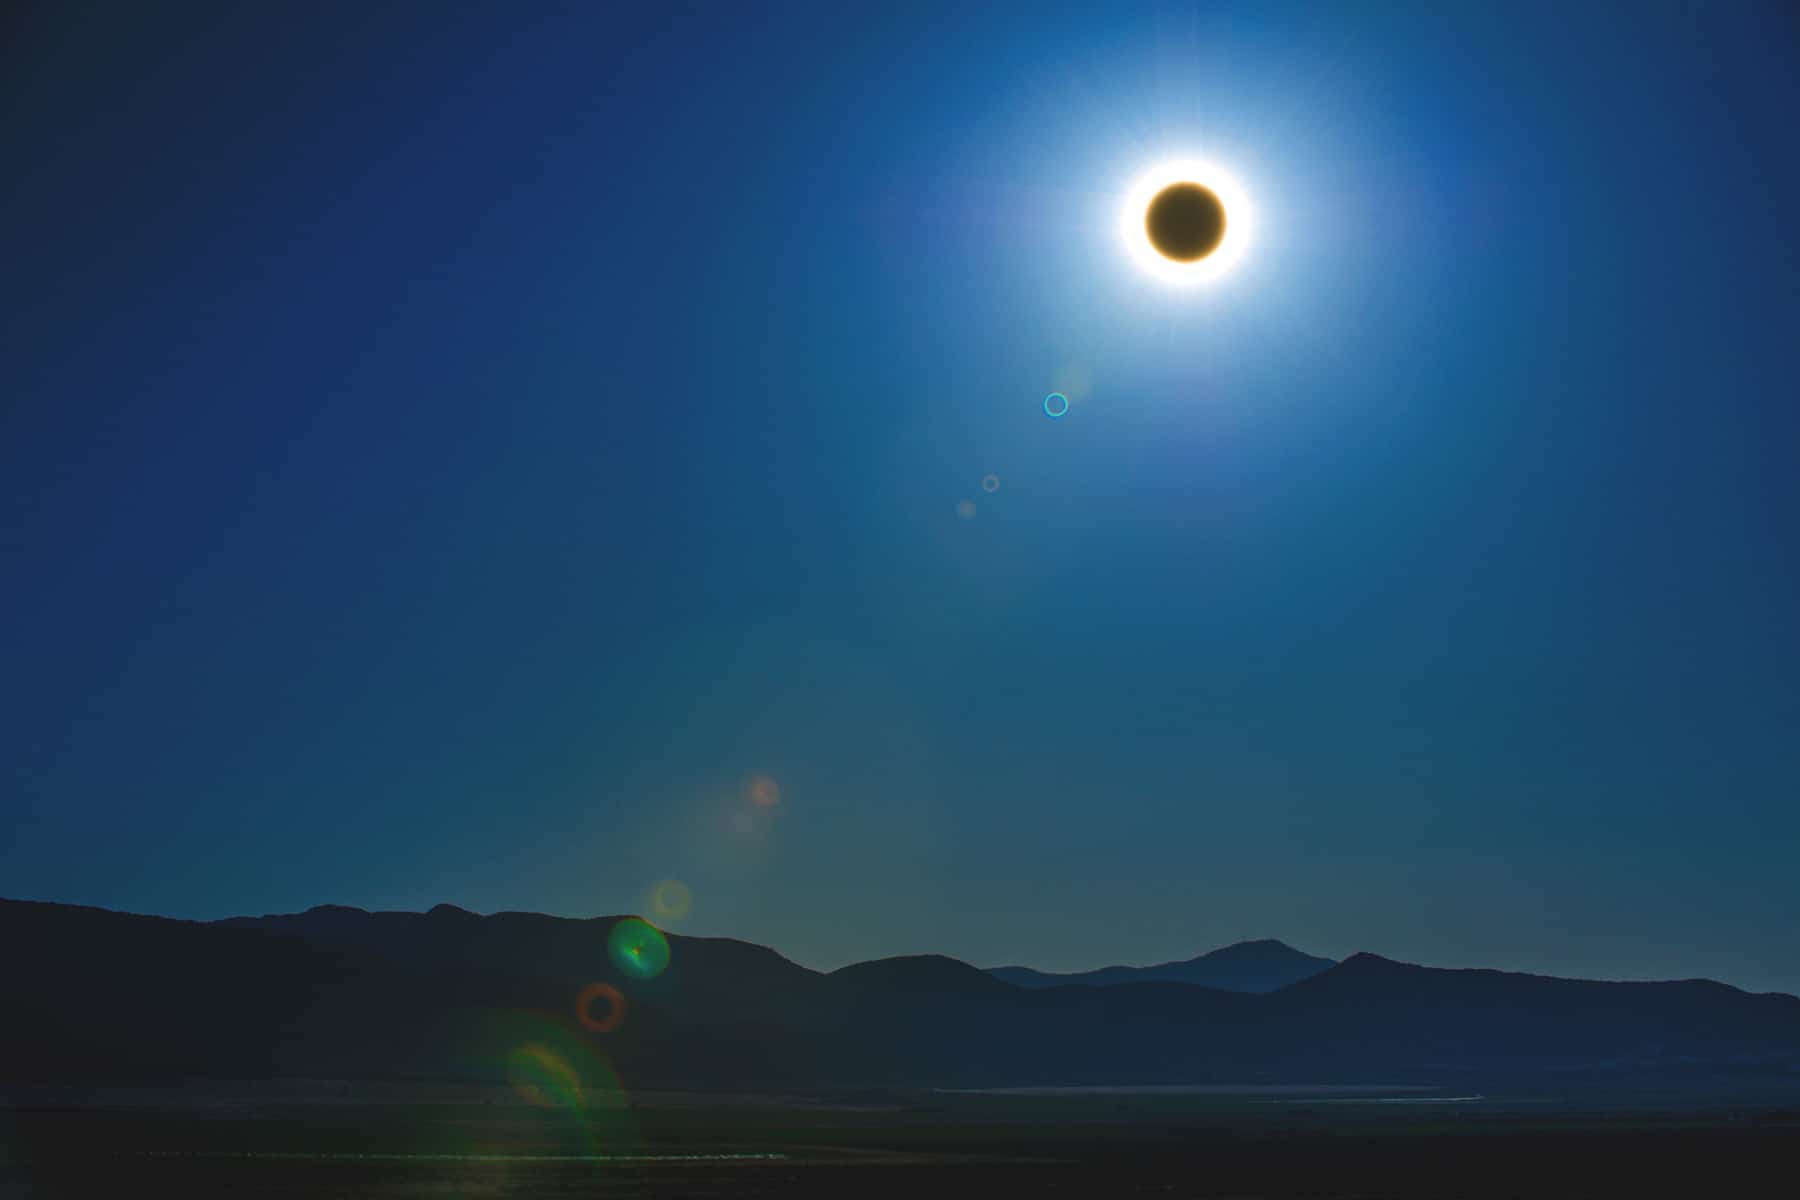 National Parks Solar Eclipse 2023